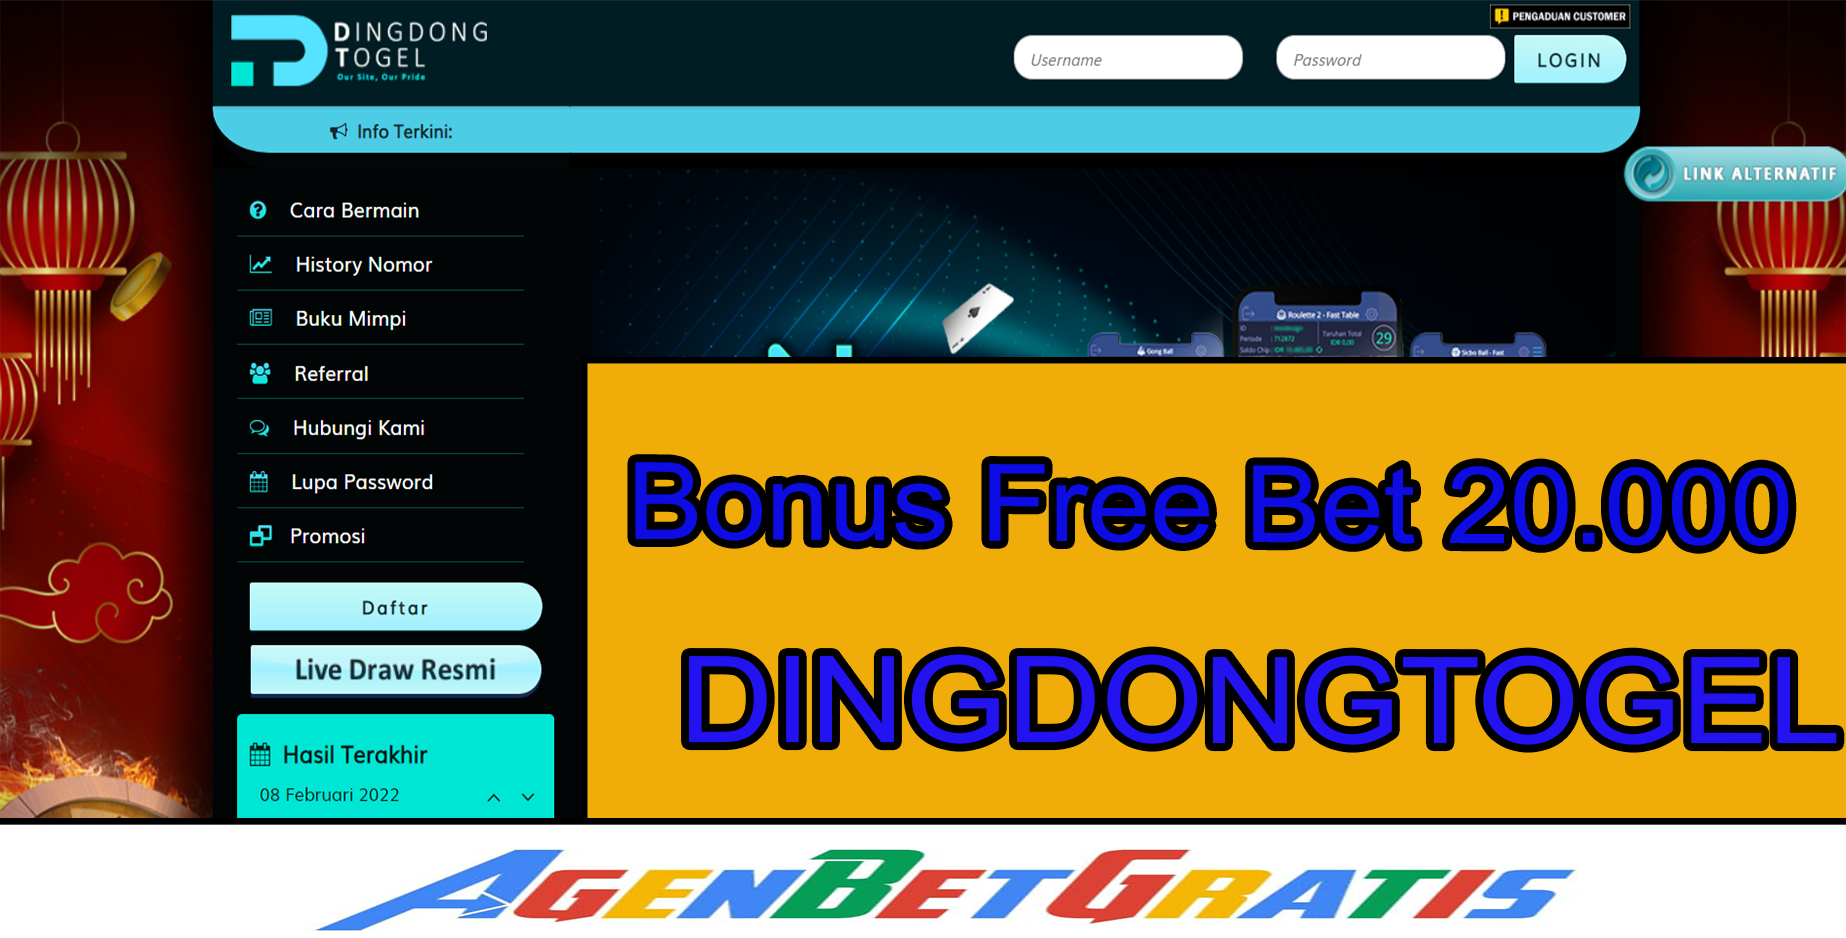 DINGDONGTOGEL - Bonus FreeBet 20.000